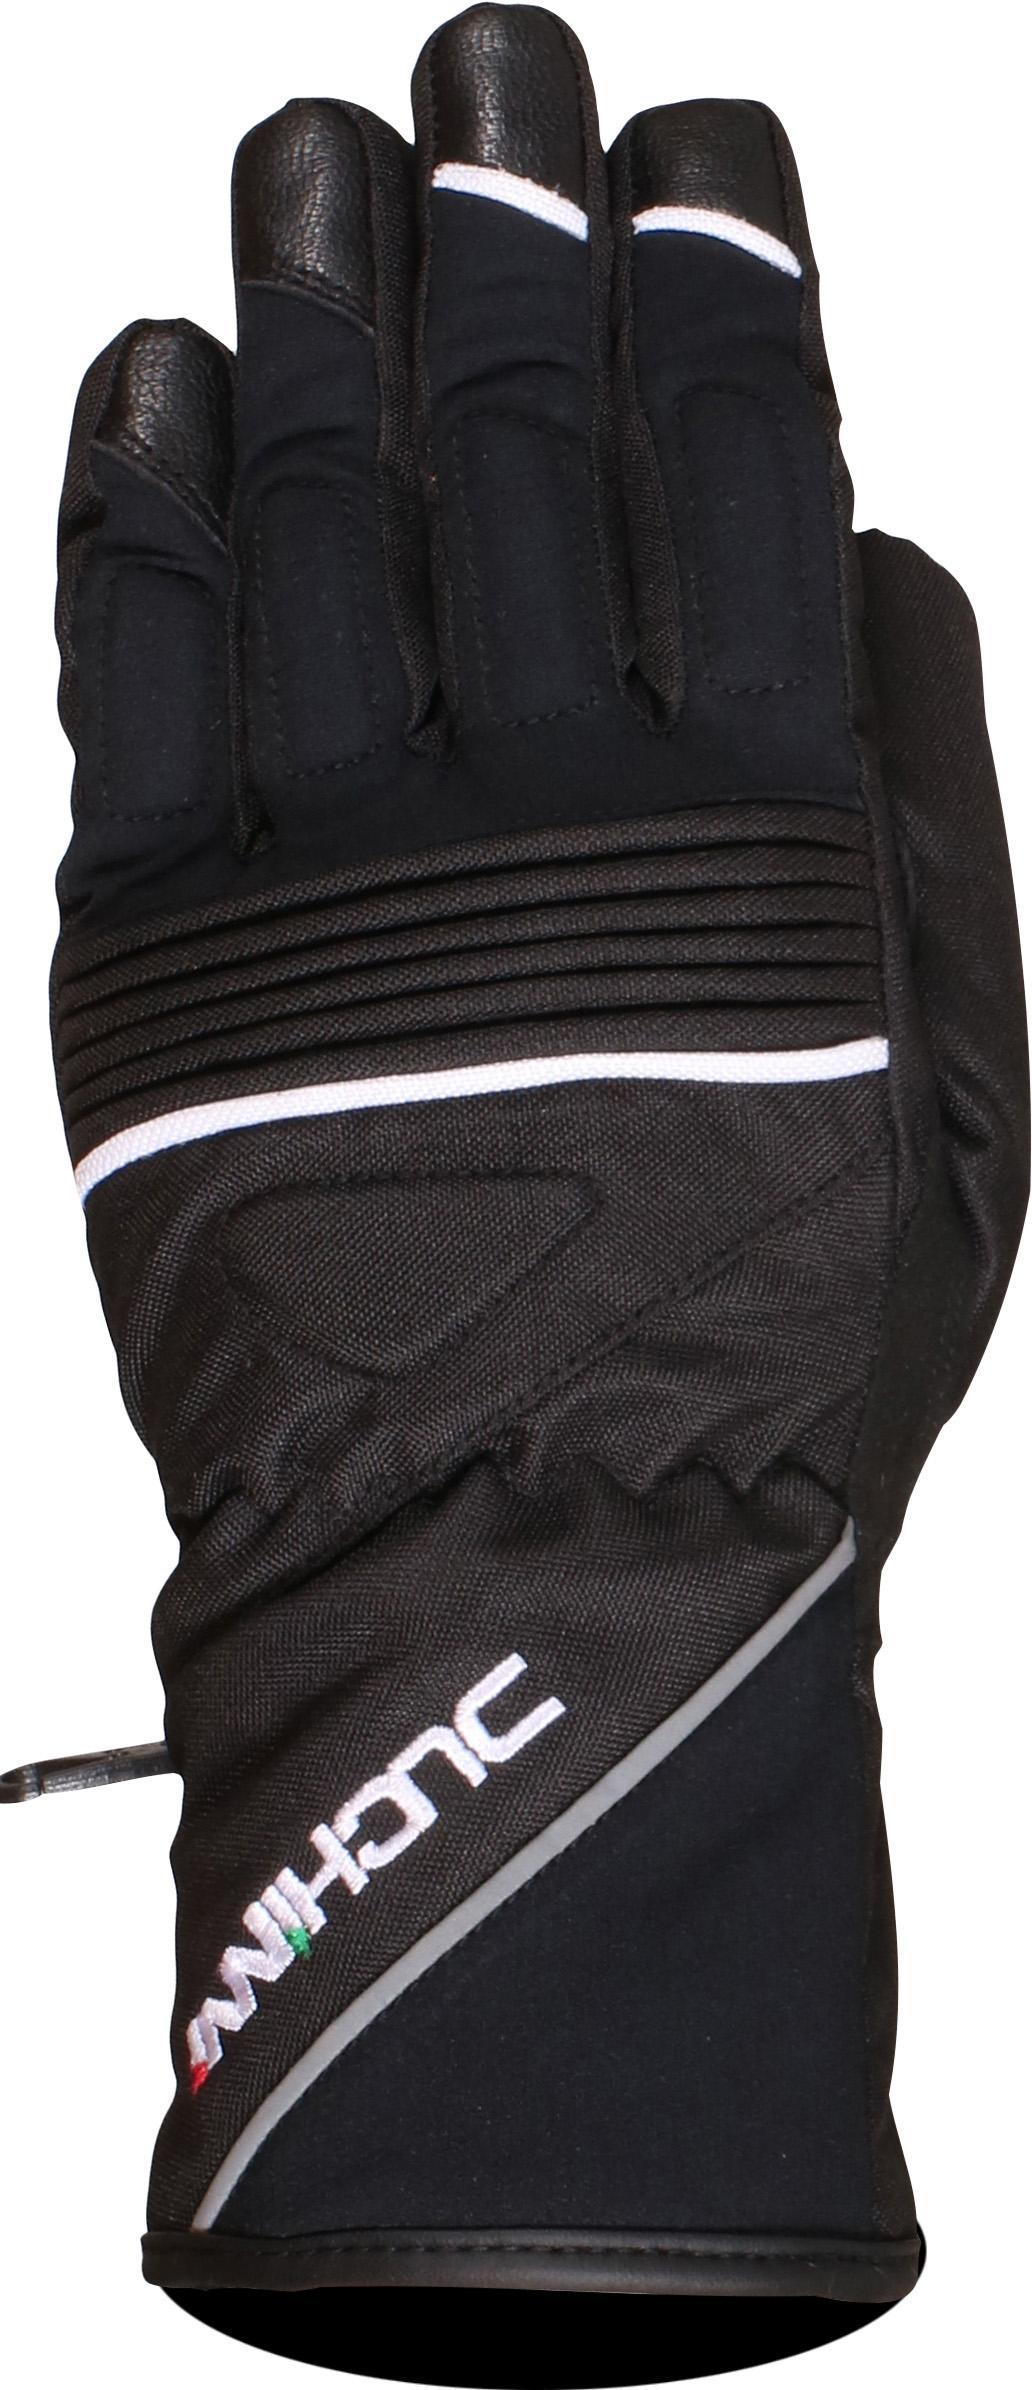 Duchinni Verona Women's Motorcycle Gloves - Black And White, Xs